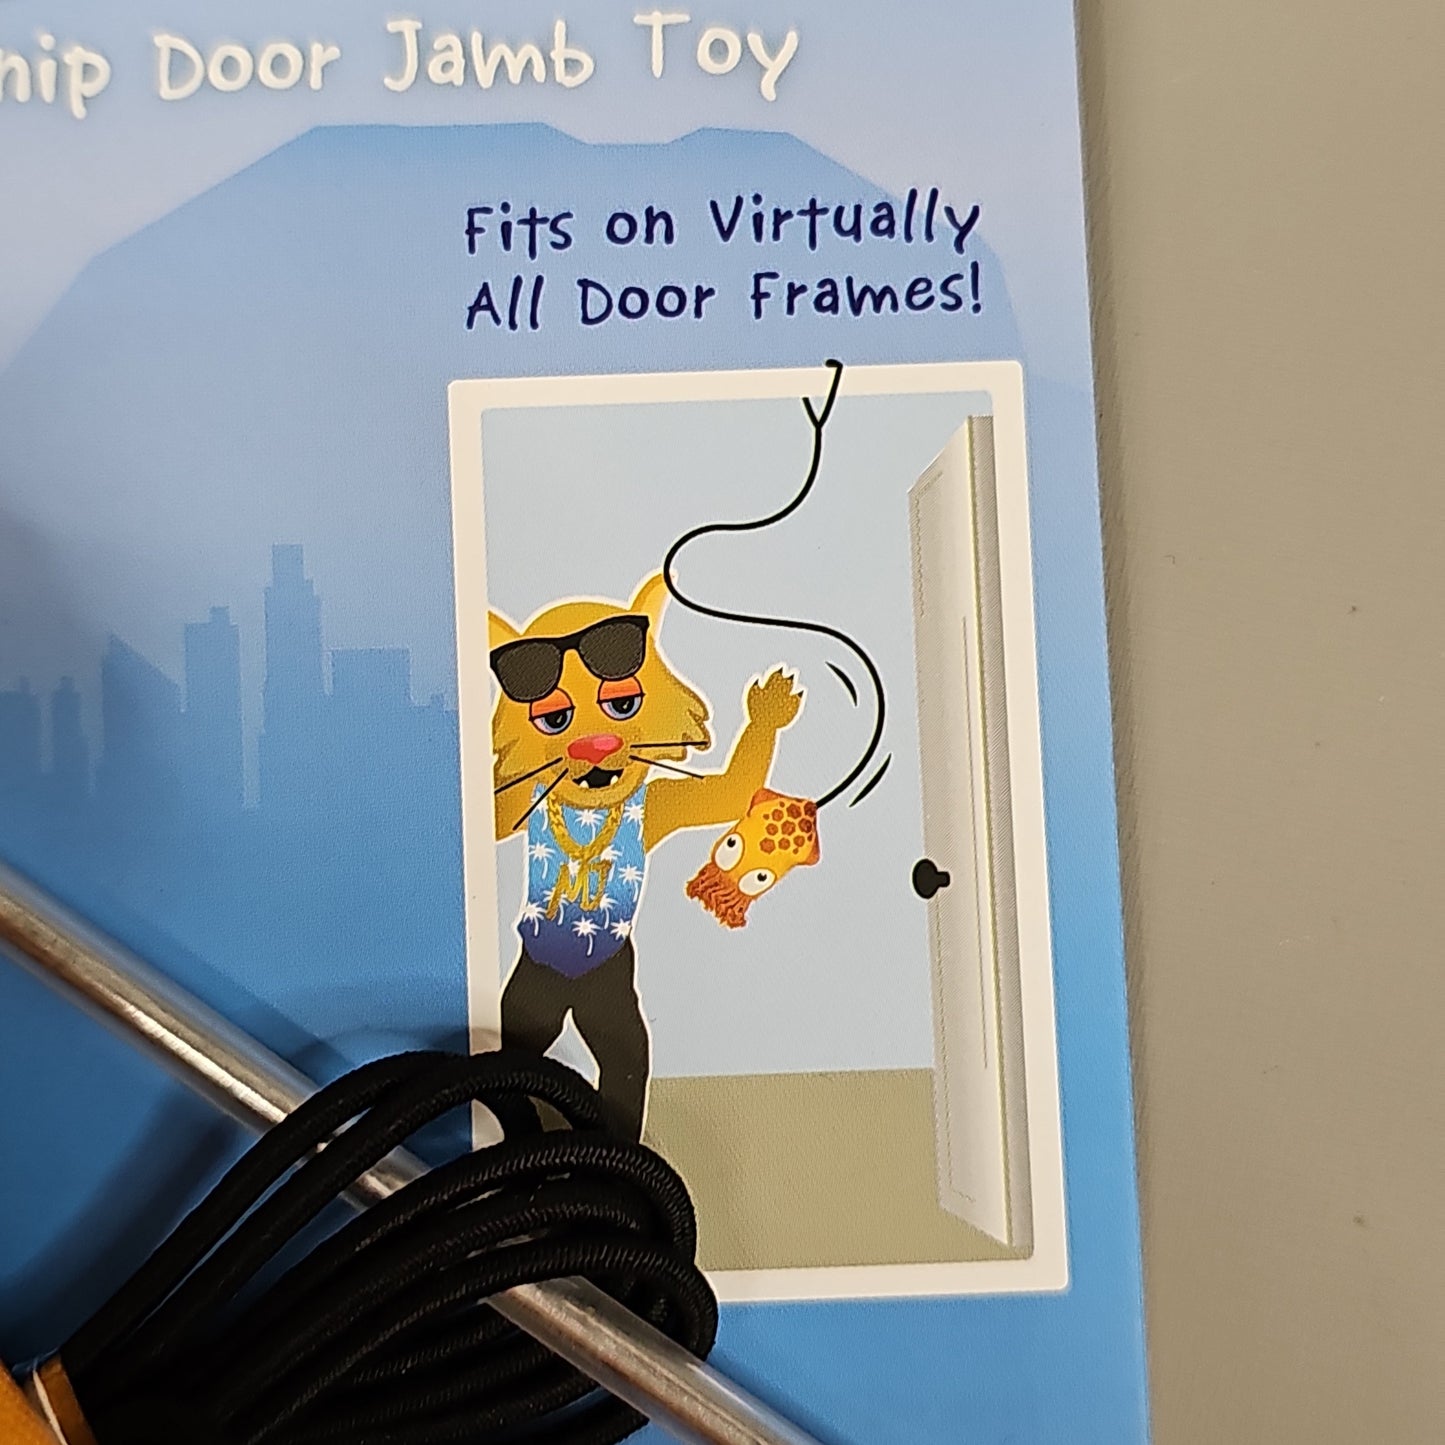 SMARTER PAW Meowijuana Organic Catnip Toy Jump 'n' Jamb Deep Sea Squid Door Jamb Cat Toy (New)